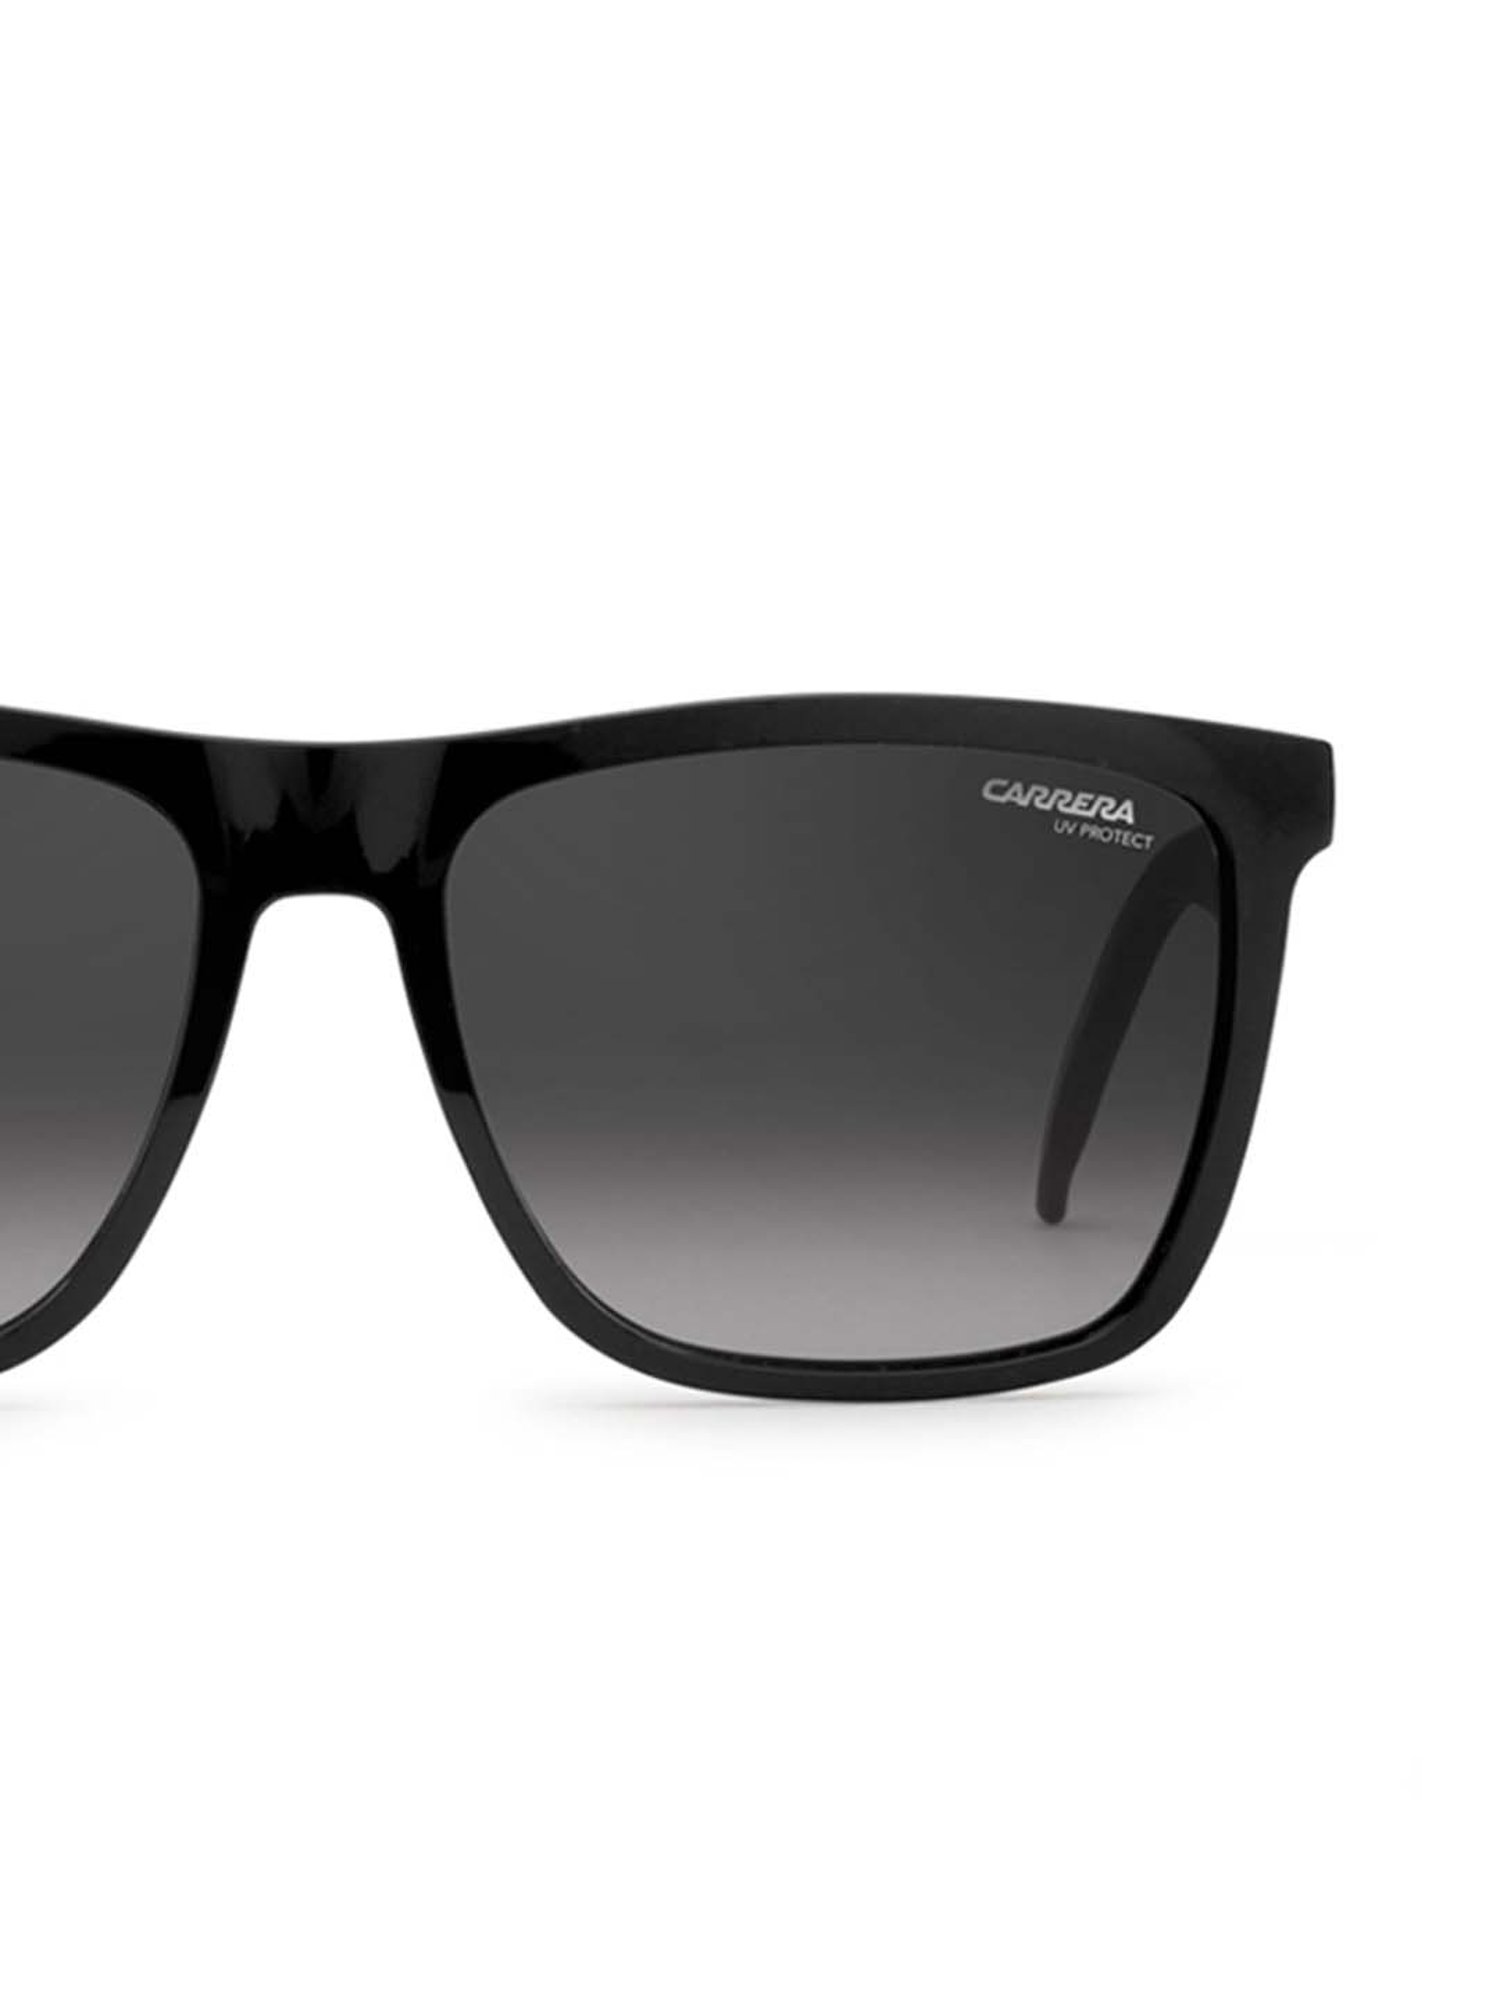 Carrera Sunglasses 40 90d90 Gloss Black Frame Grey Gradient Lens for sale  online | eBay